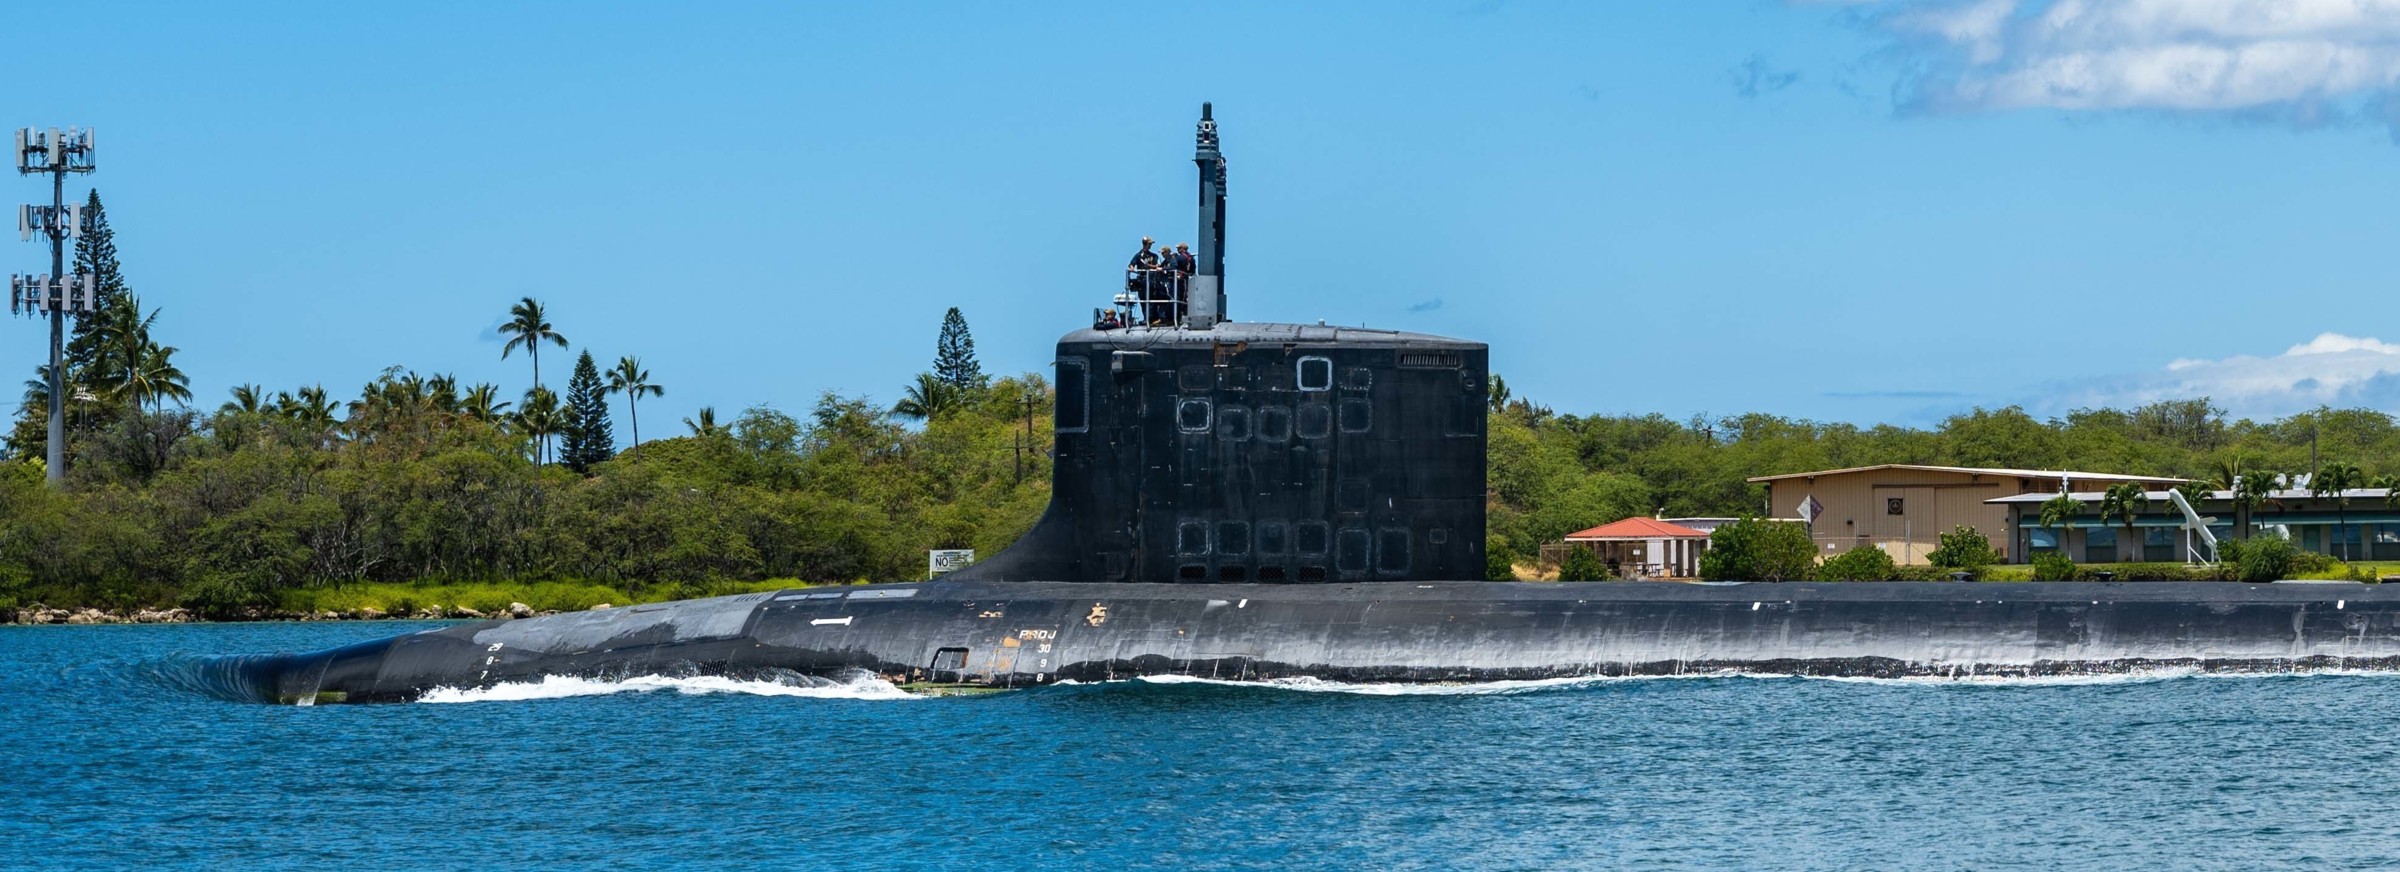 ssn-780 uss missouri virginia class attack submarine us navy 60